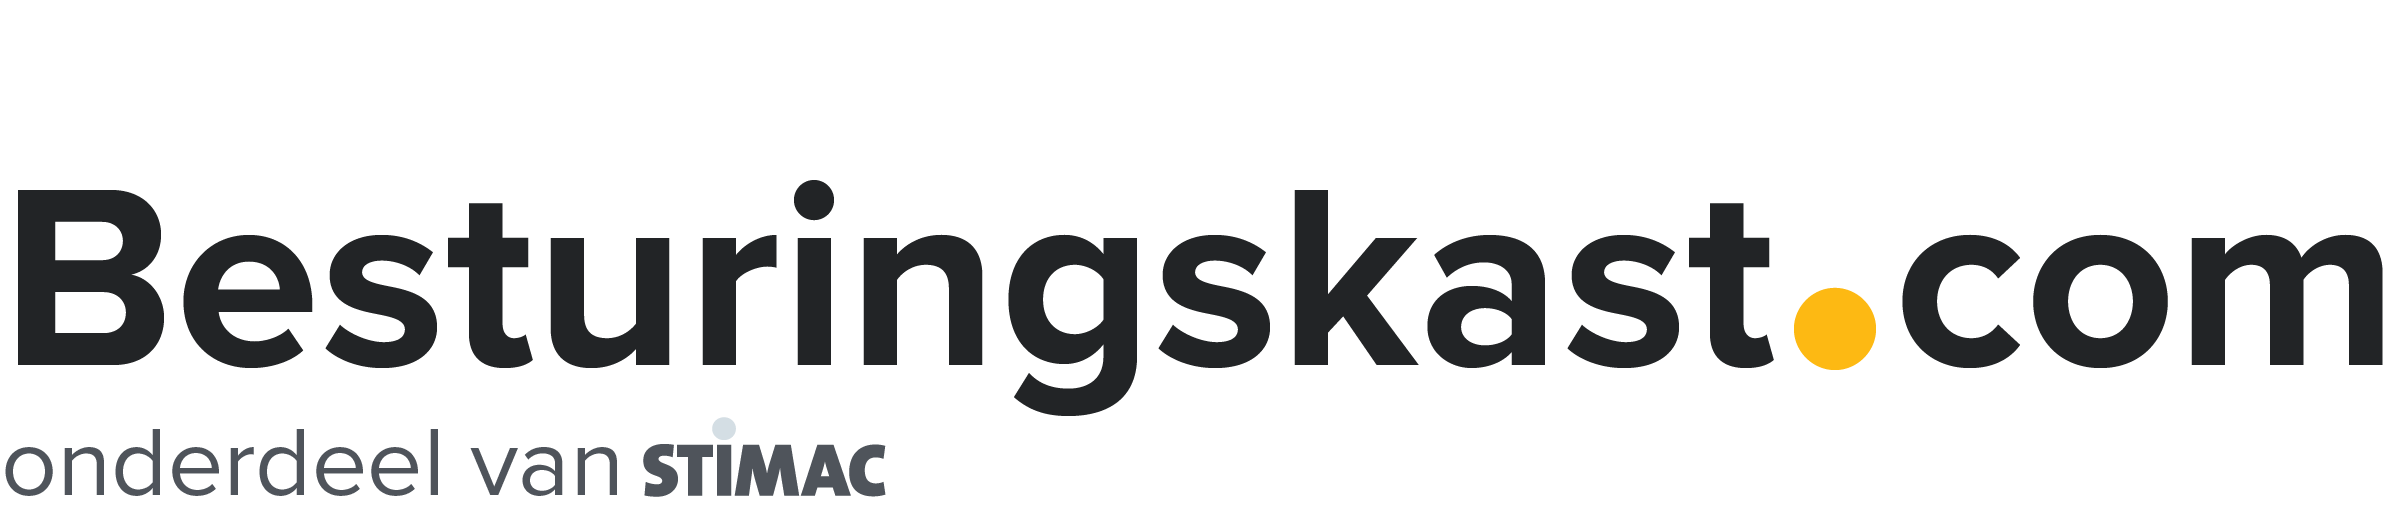 Besturingskast.com - Logo - Donker